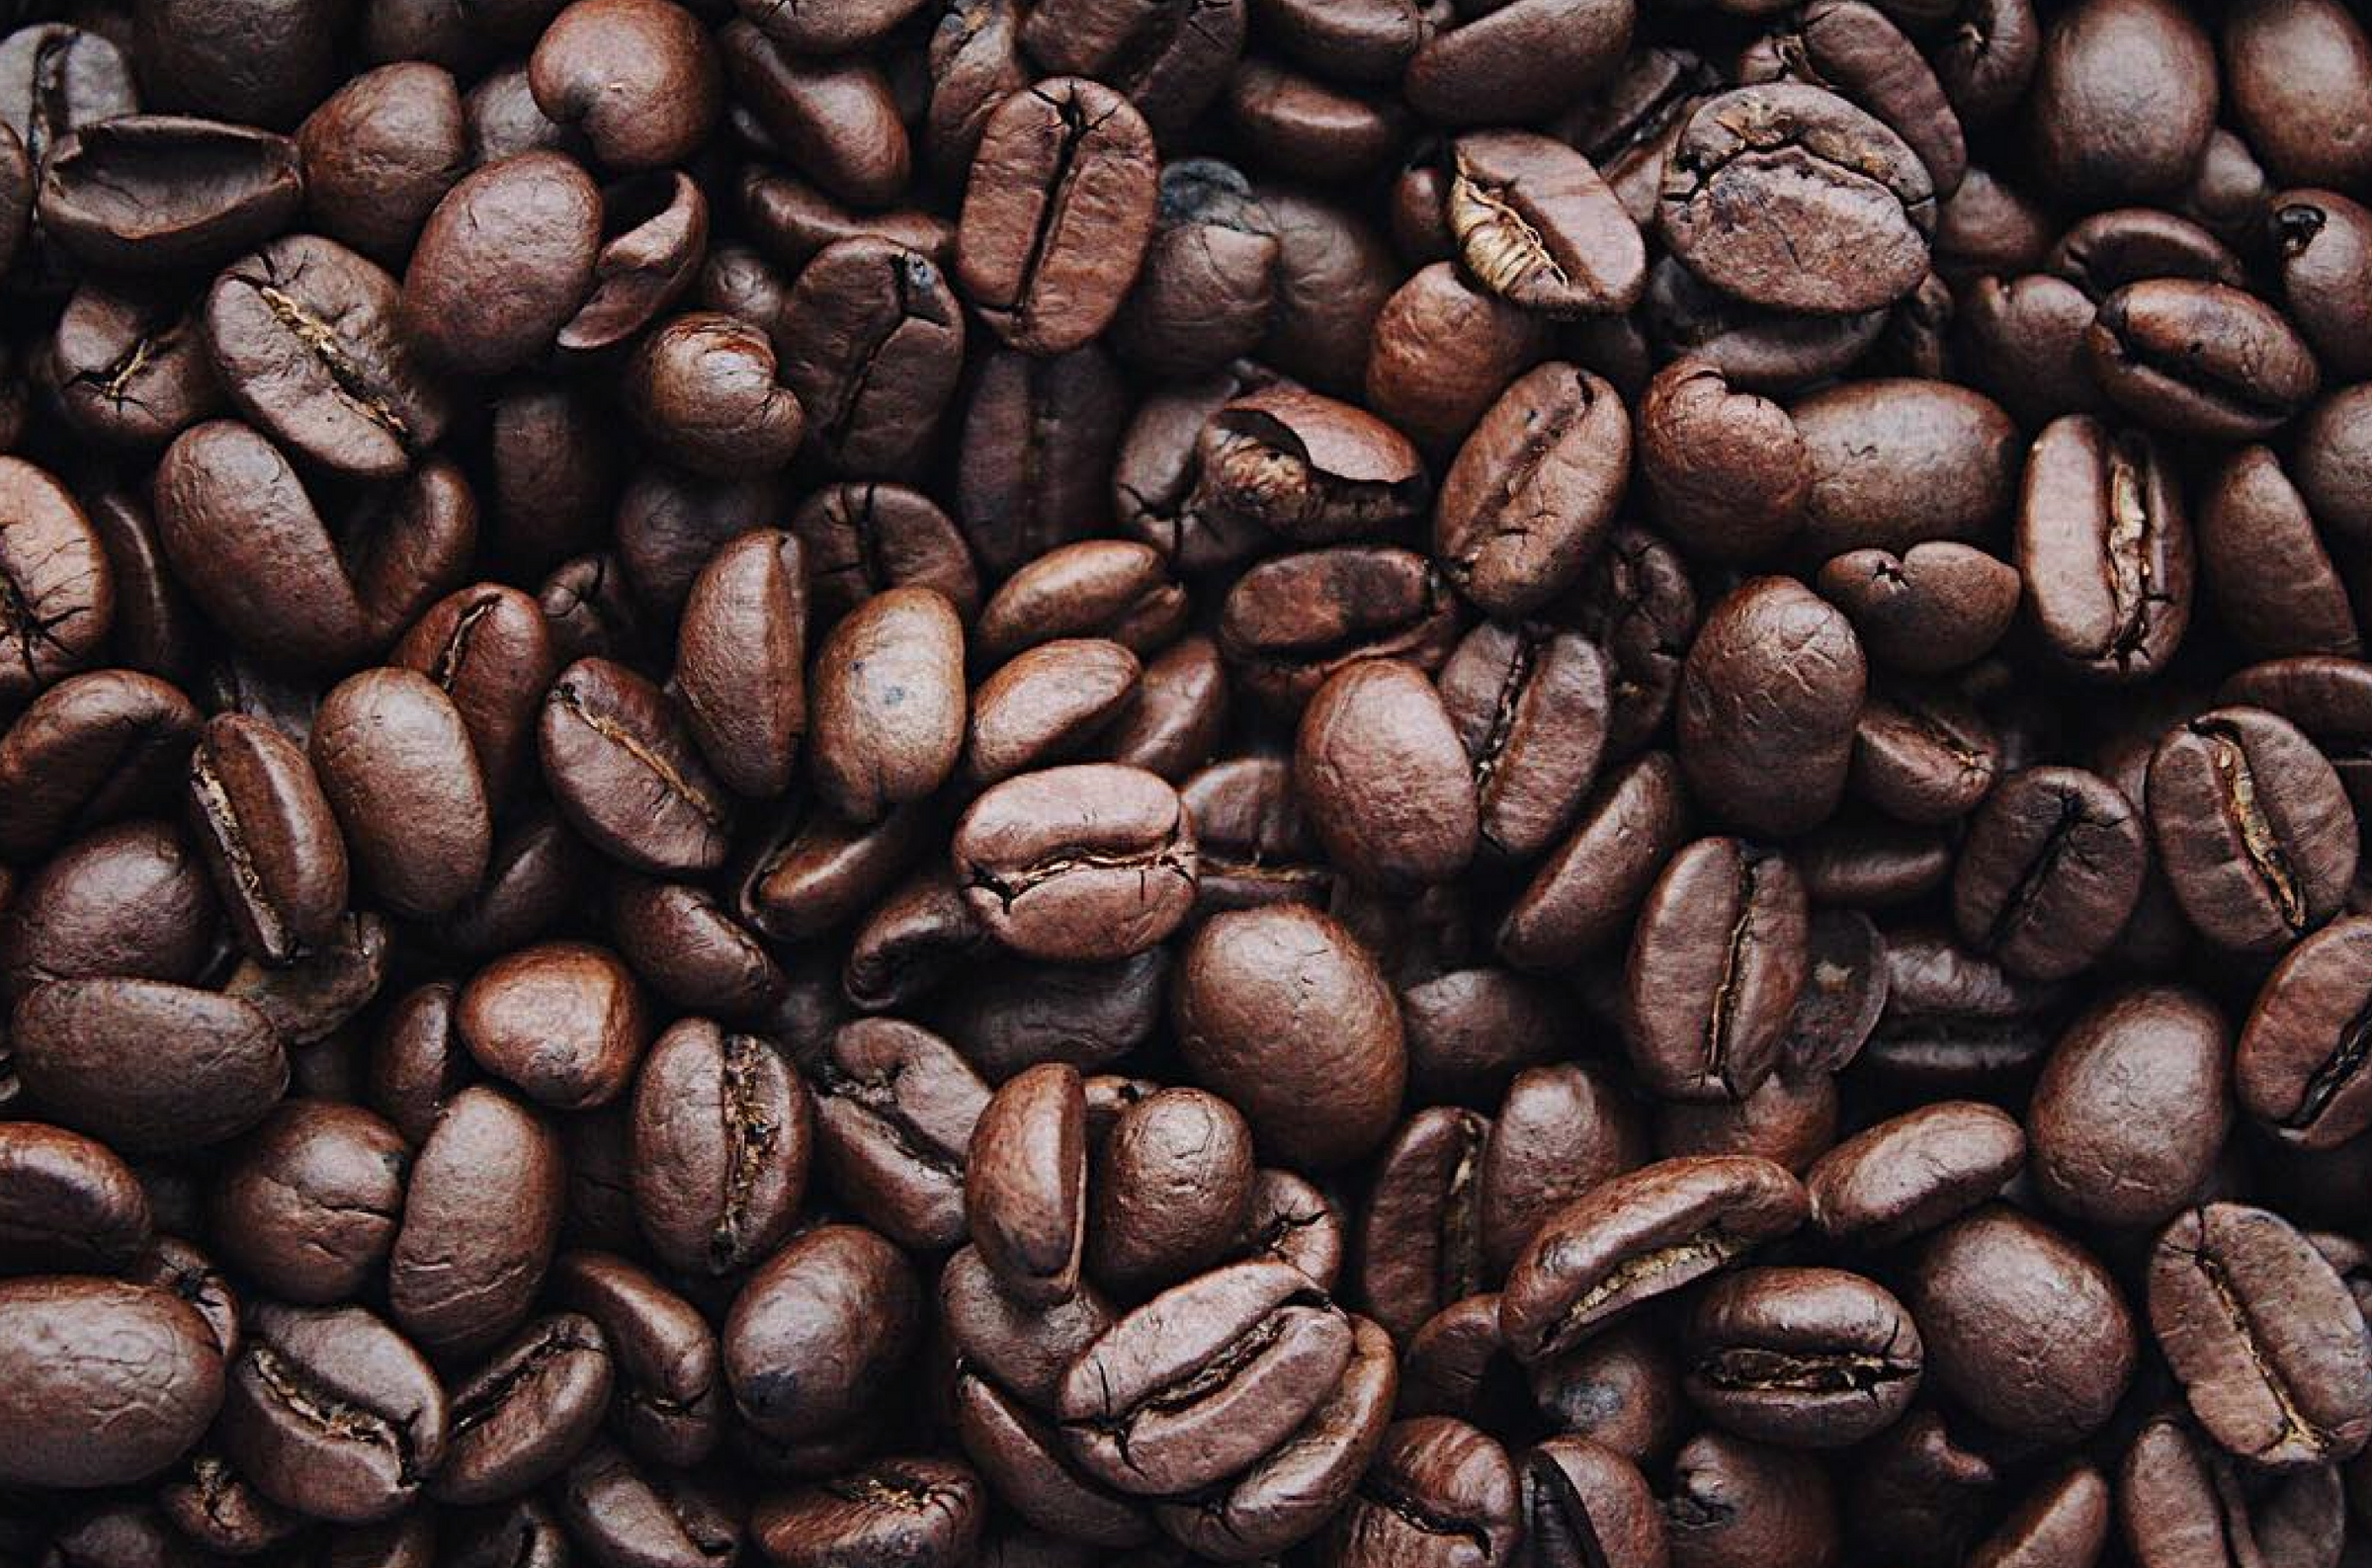 AeroPress Original Coffee Maker – The Cook's Nook